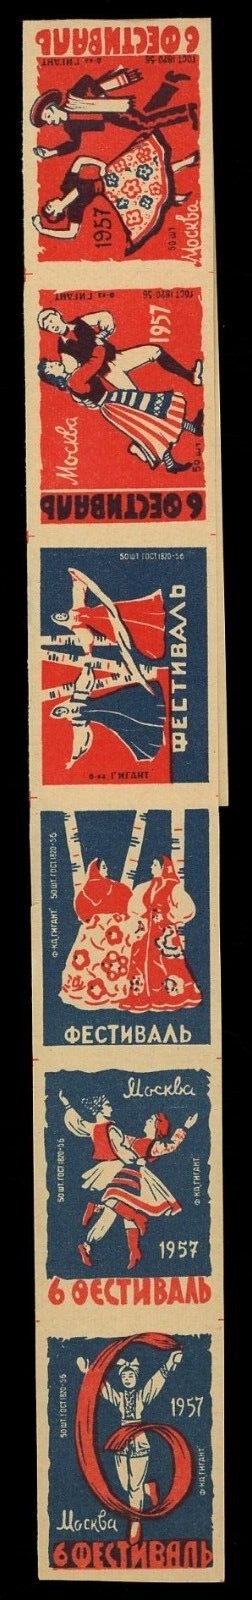 1957 Uncut Sheet of 9 Russian Dancing Theme Match Book Labels (9) Без бренда - фотография #2